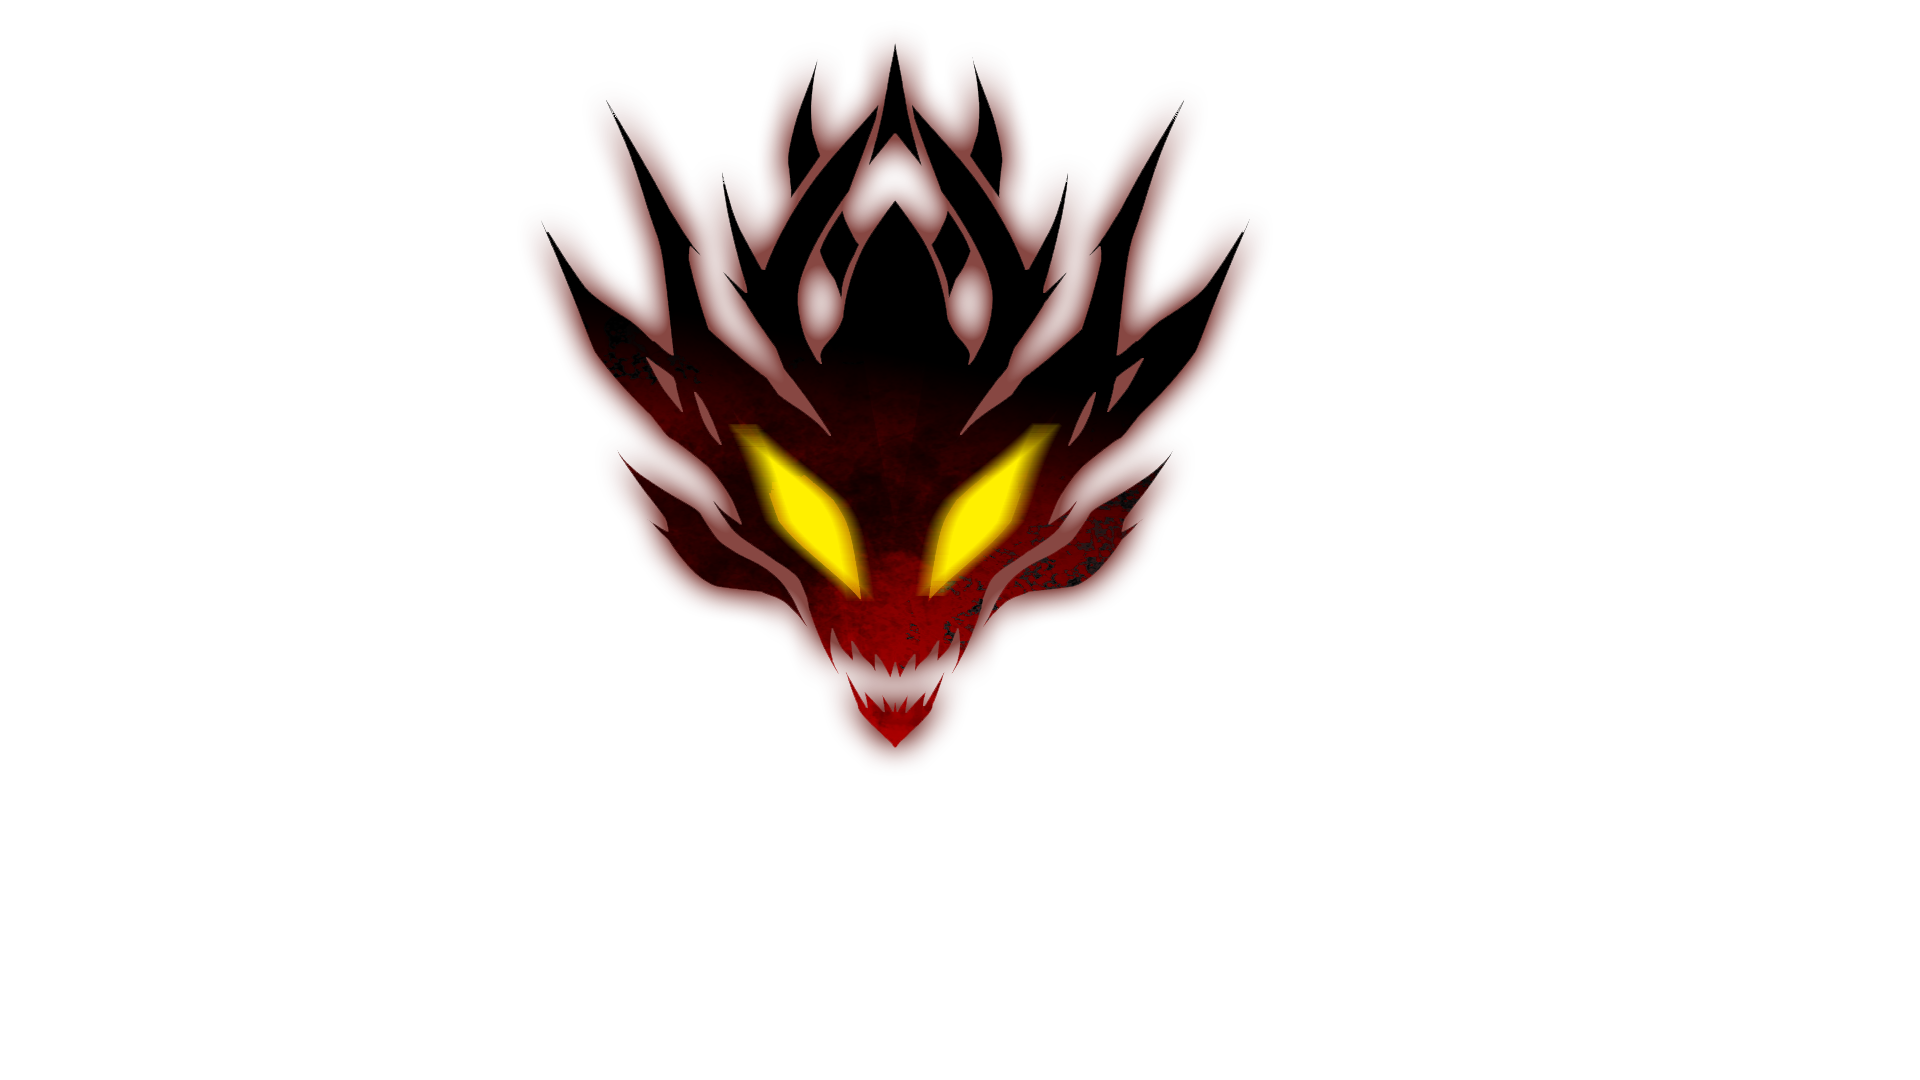 cool dragon symbol